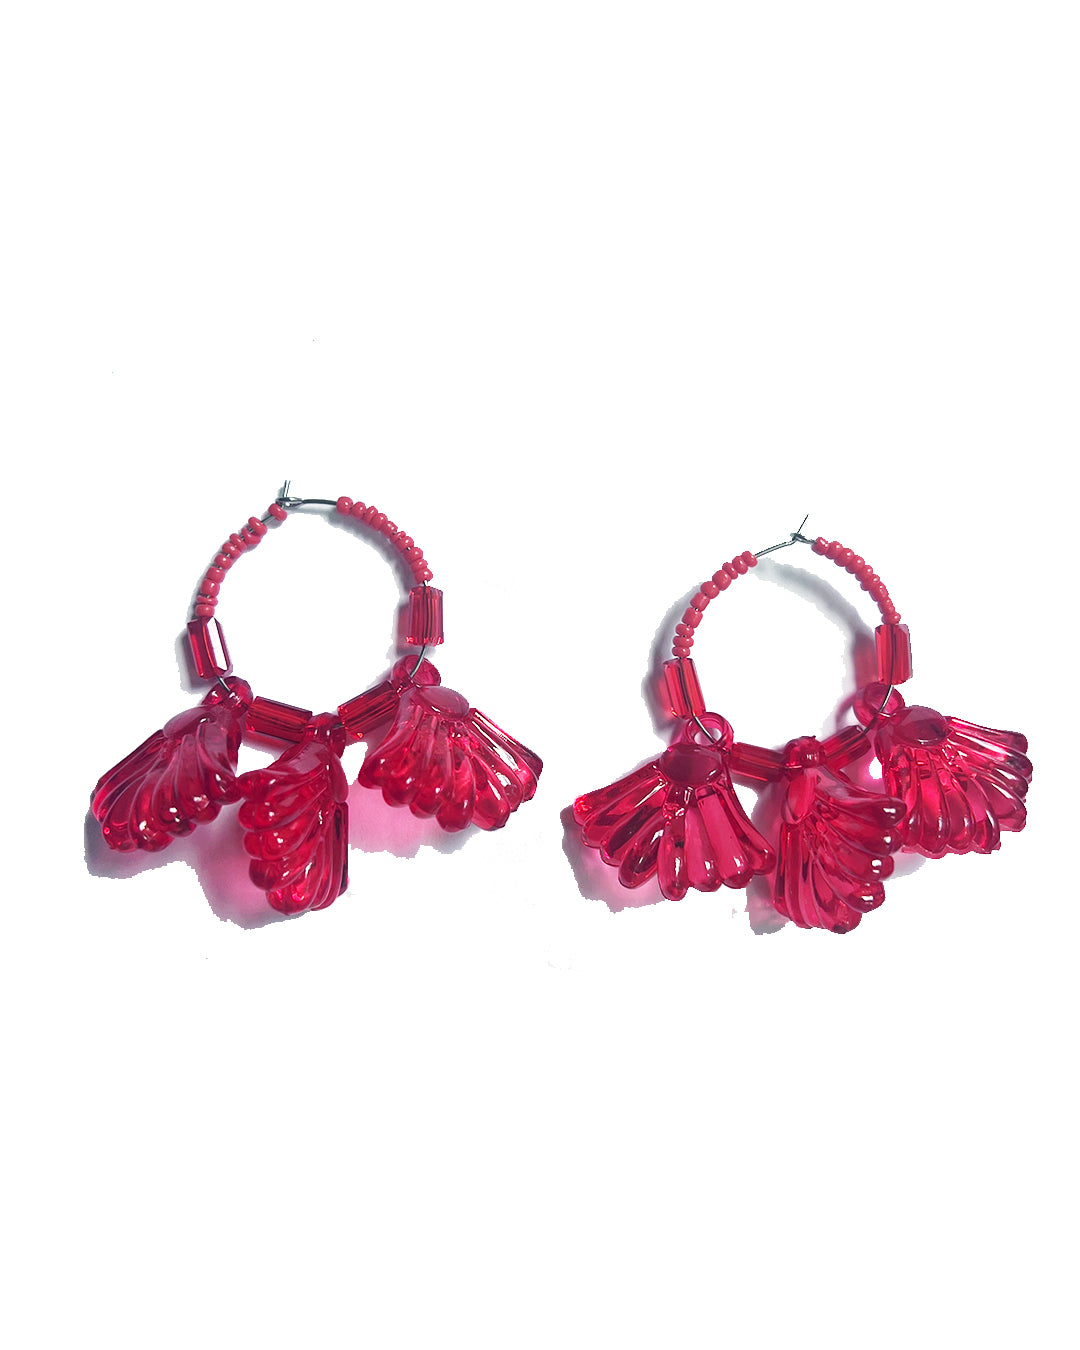 Ruby Red Fiesta Earrings  | cukimber designs